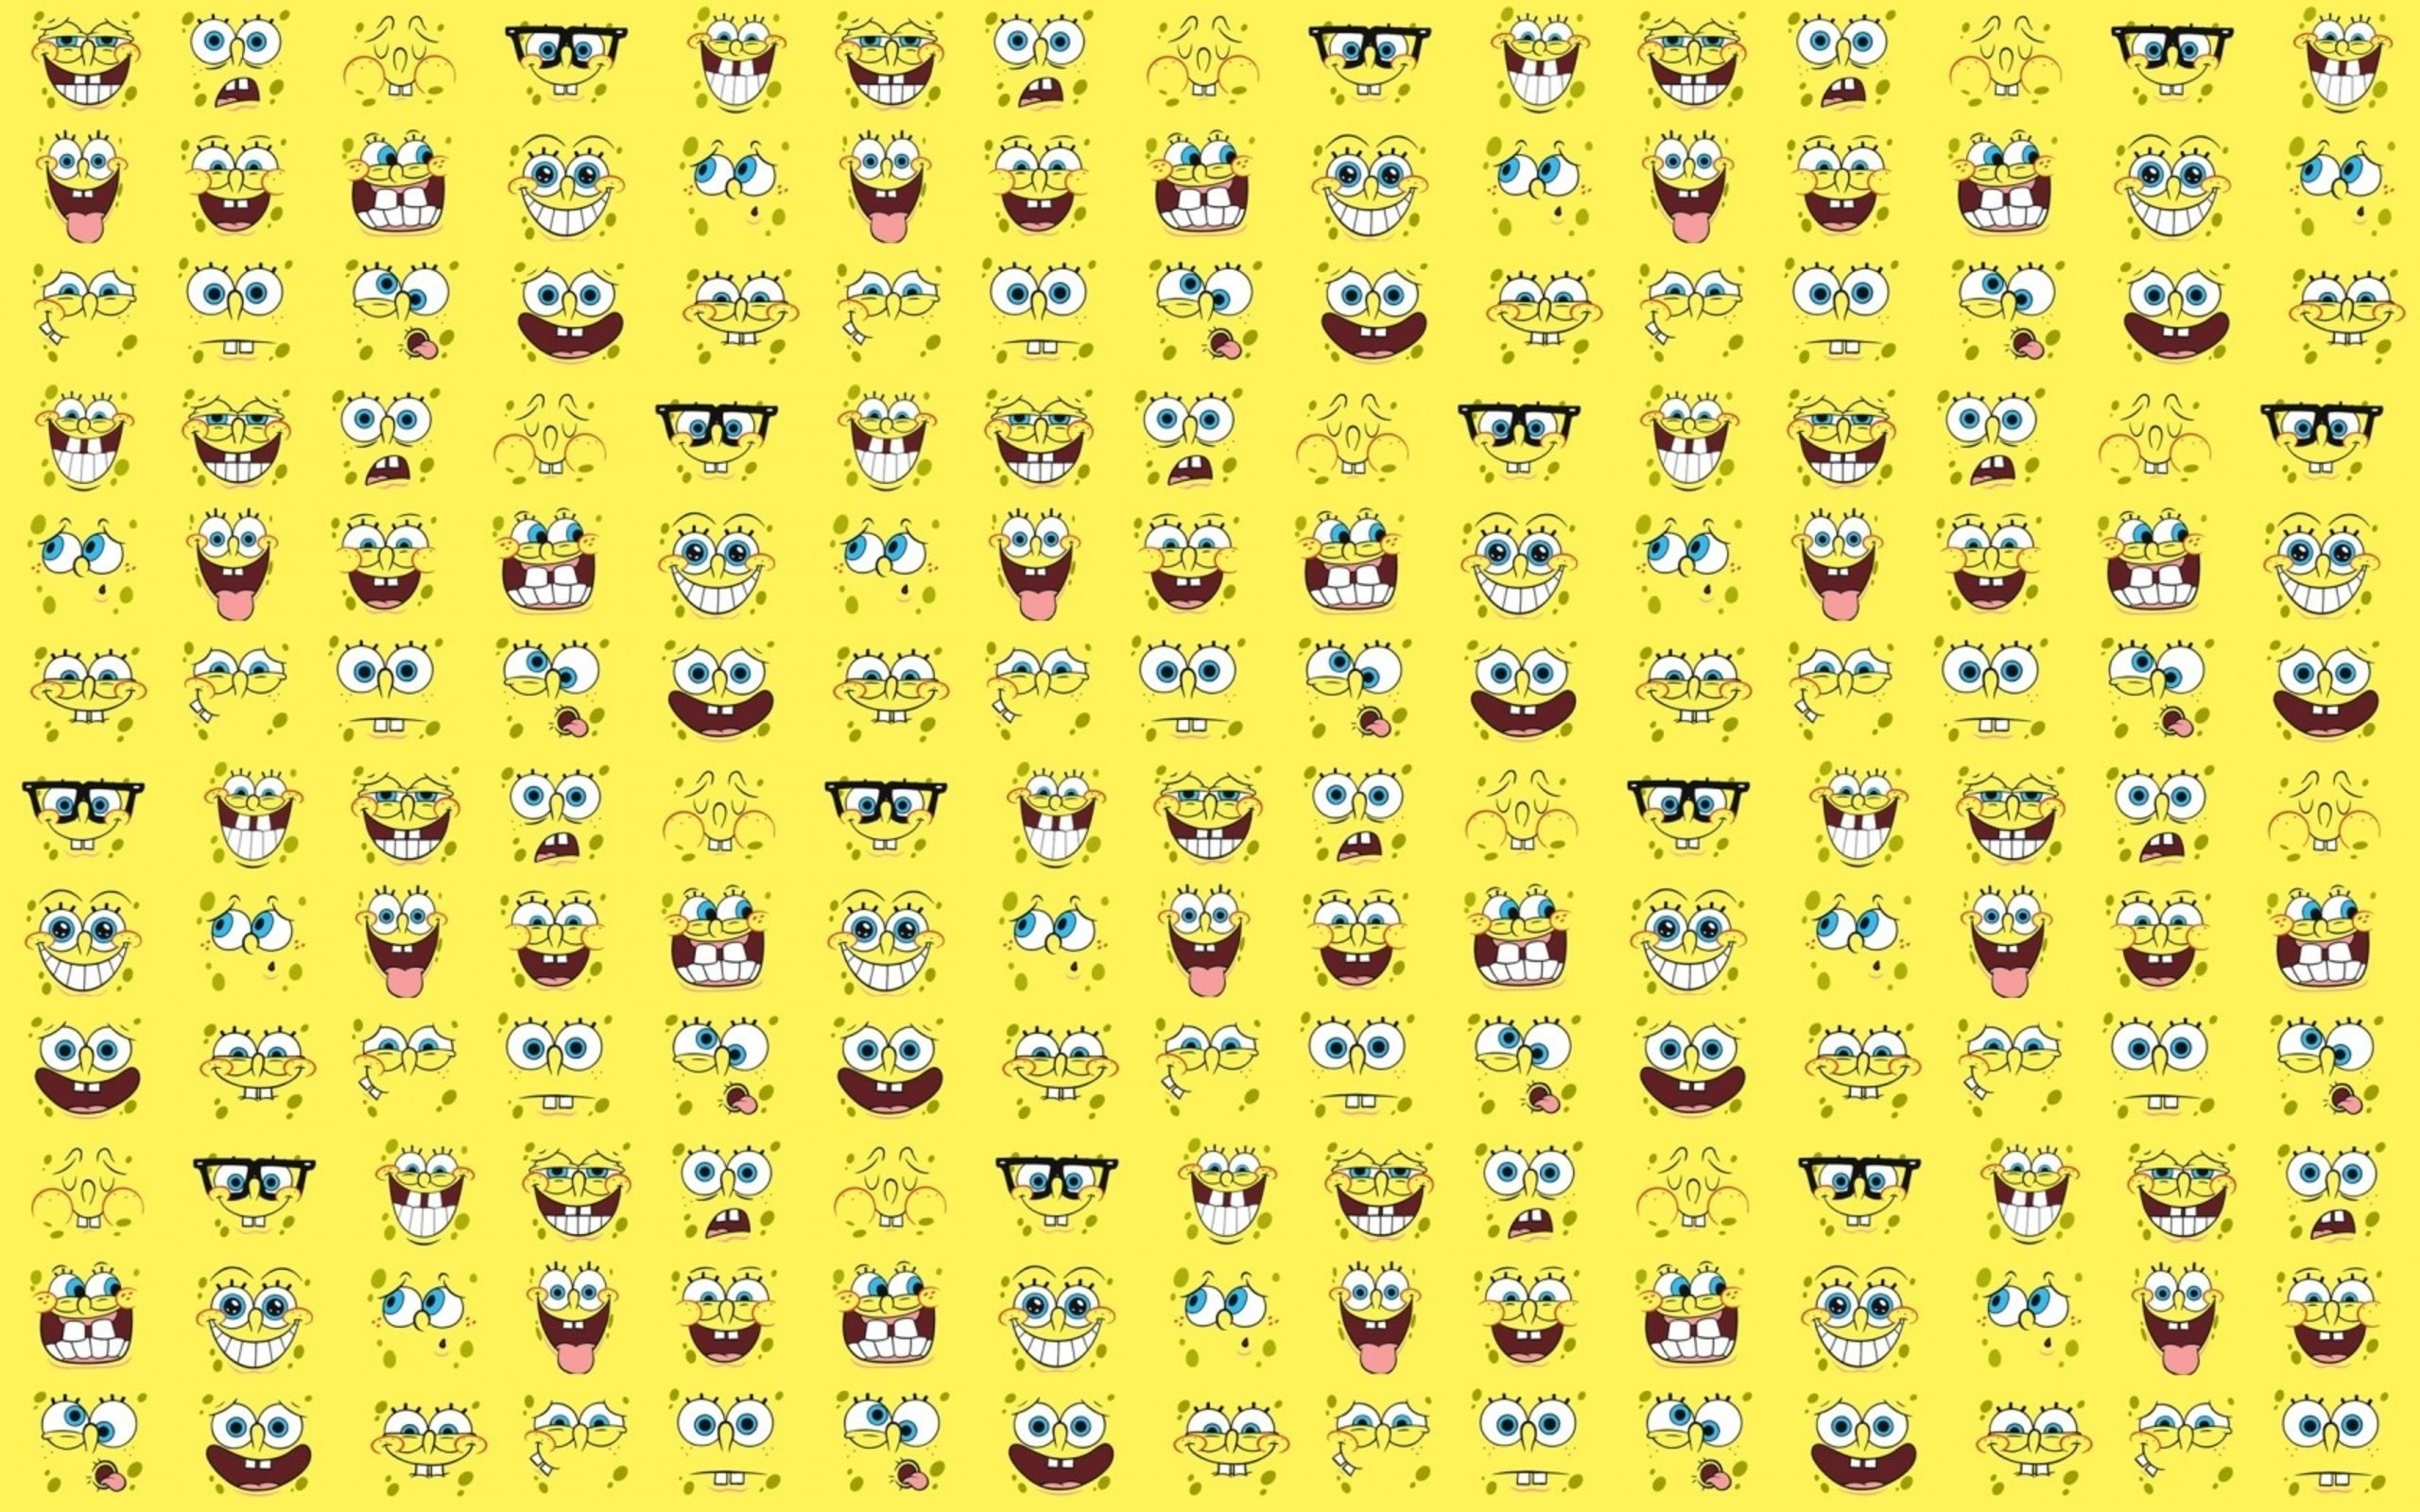 2560x1600 ... Funny wallpaper iPhone | Funny Cute wallpaper iPhone | Pinterest .